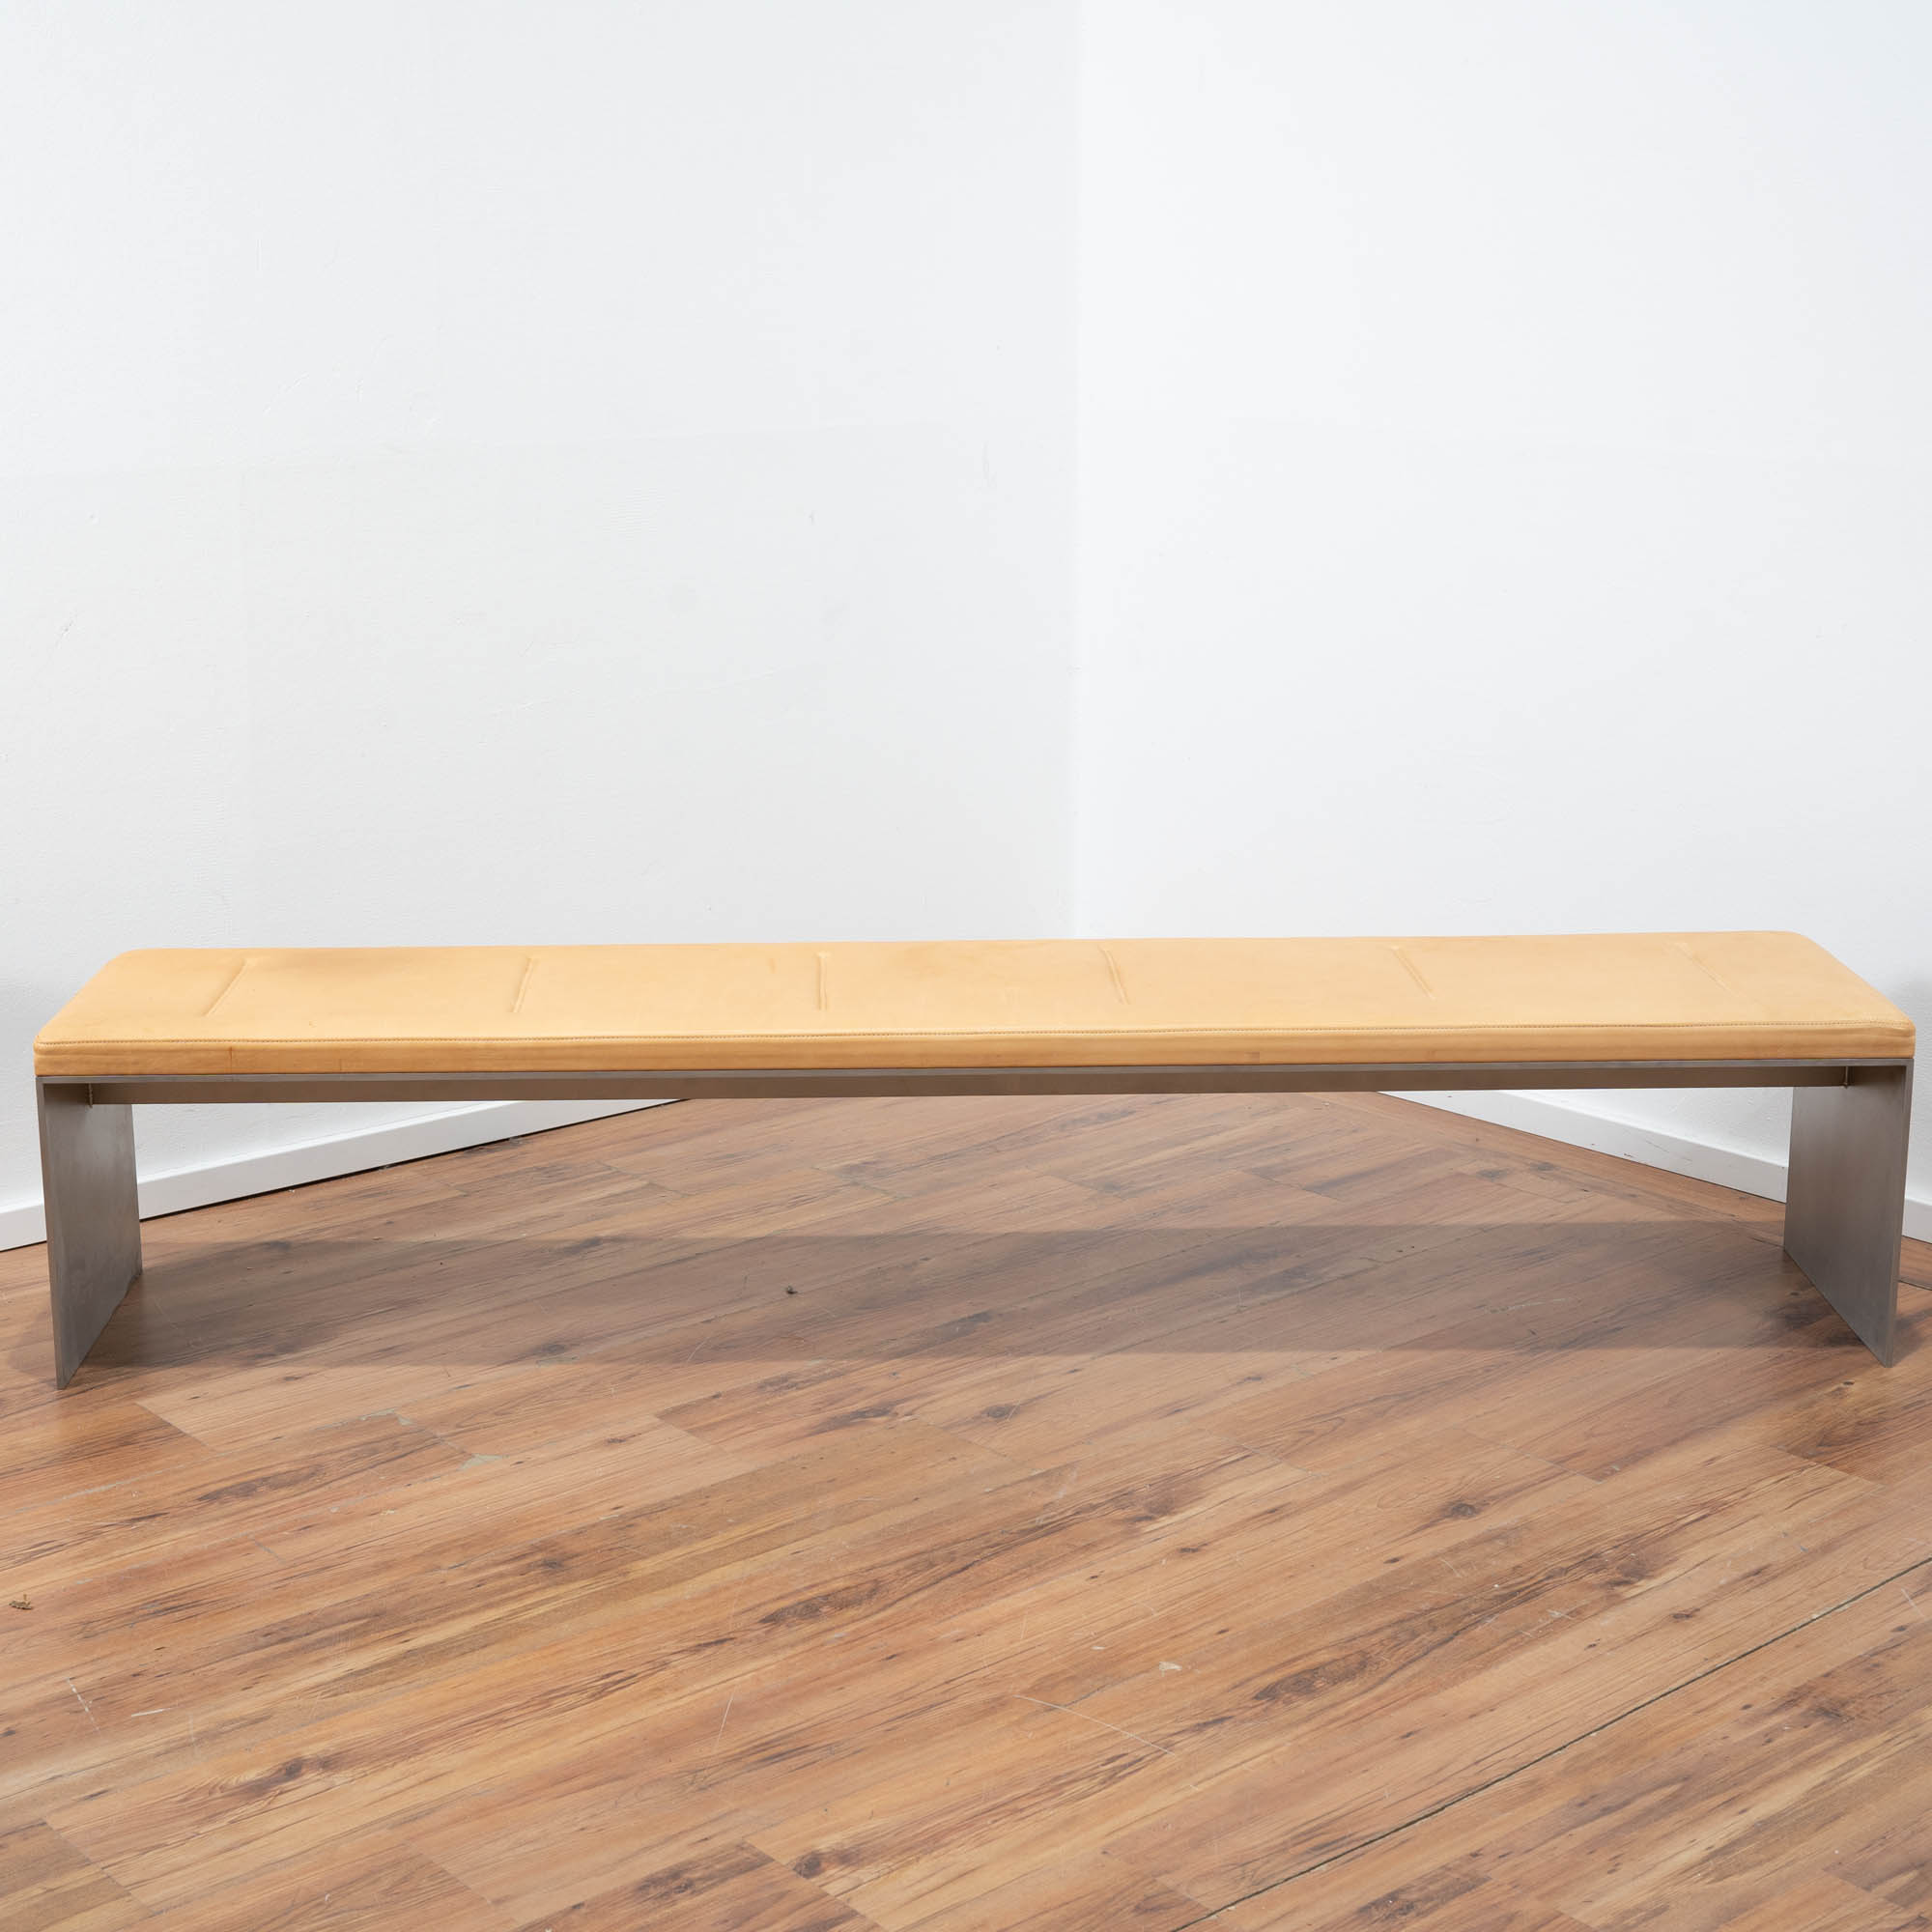 Sitzbank Edelstahl - Sitzfläche Leder beige - 200 x 40 x 40 cm 